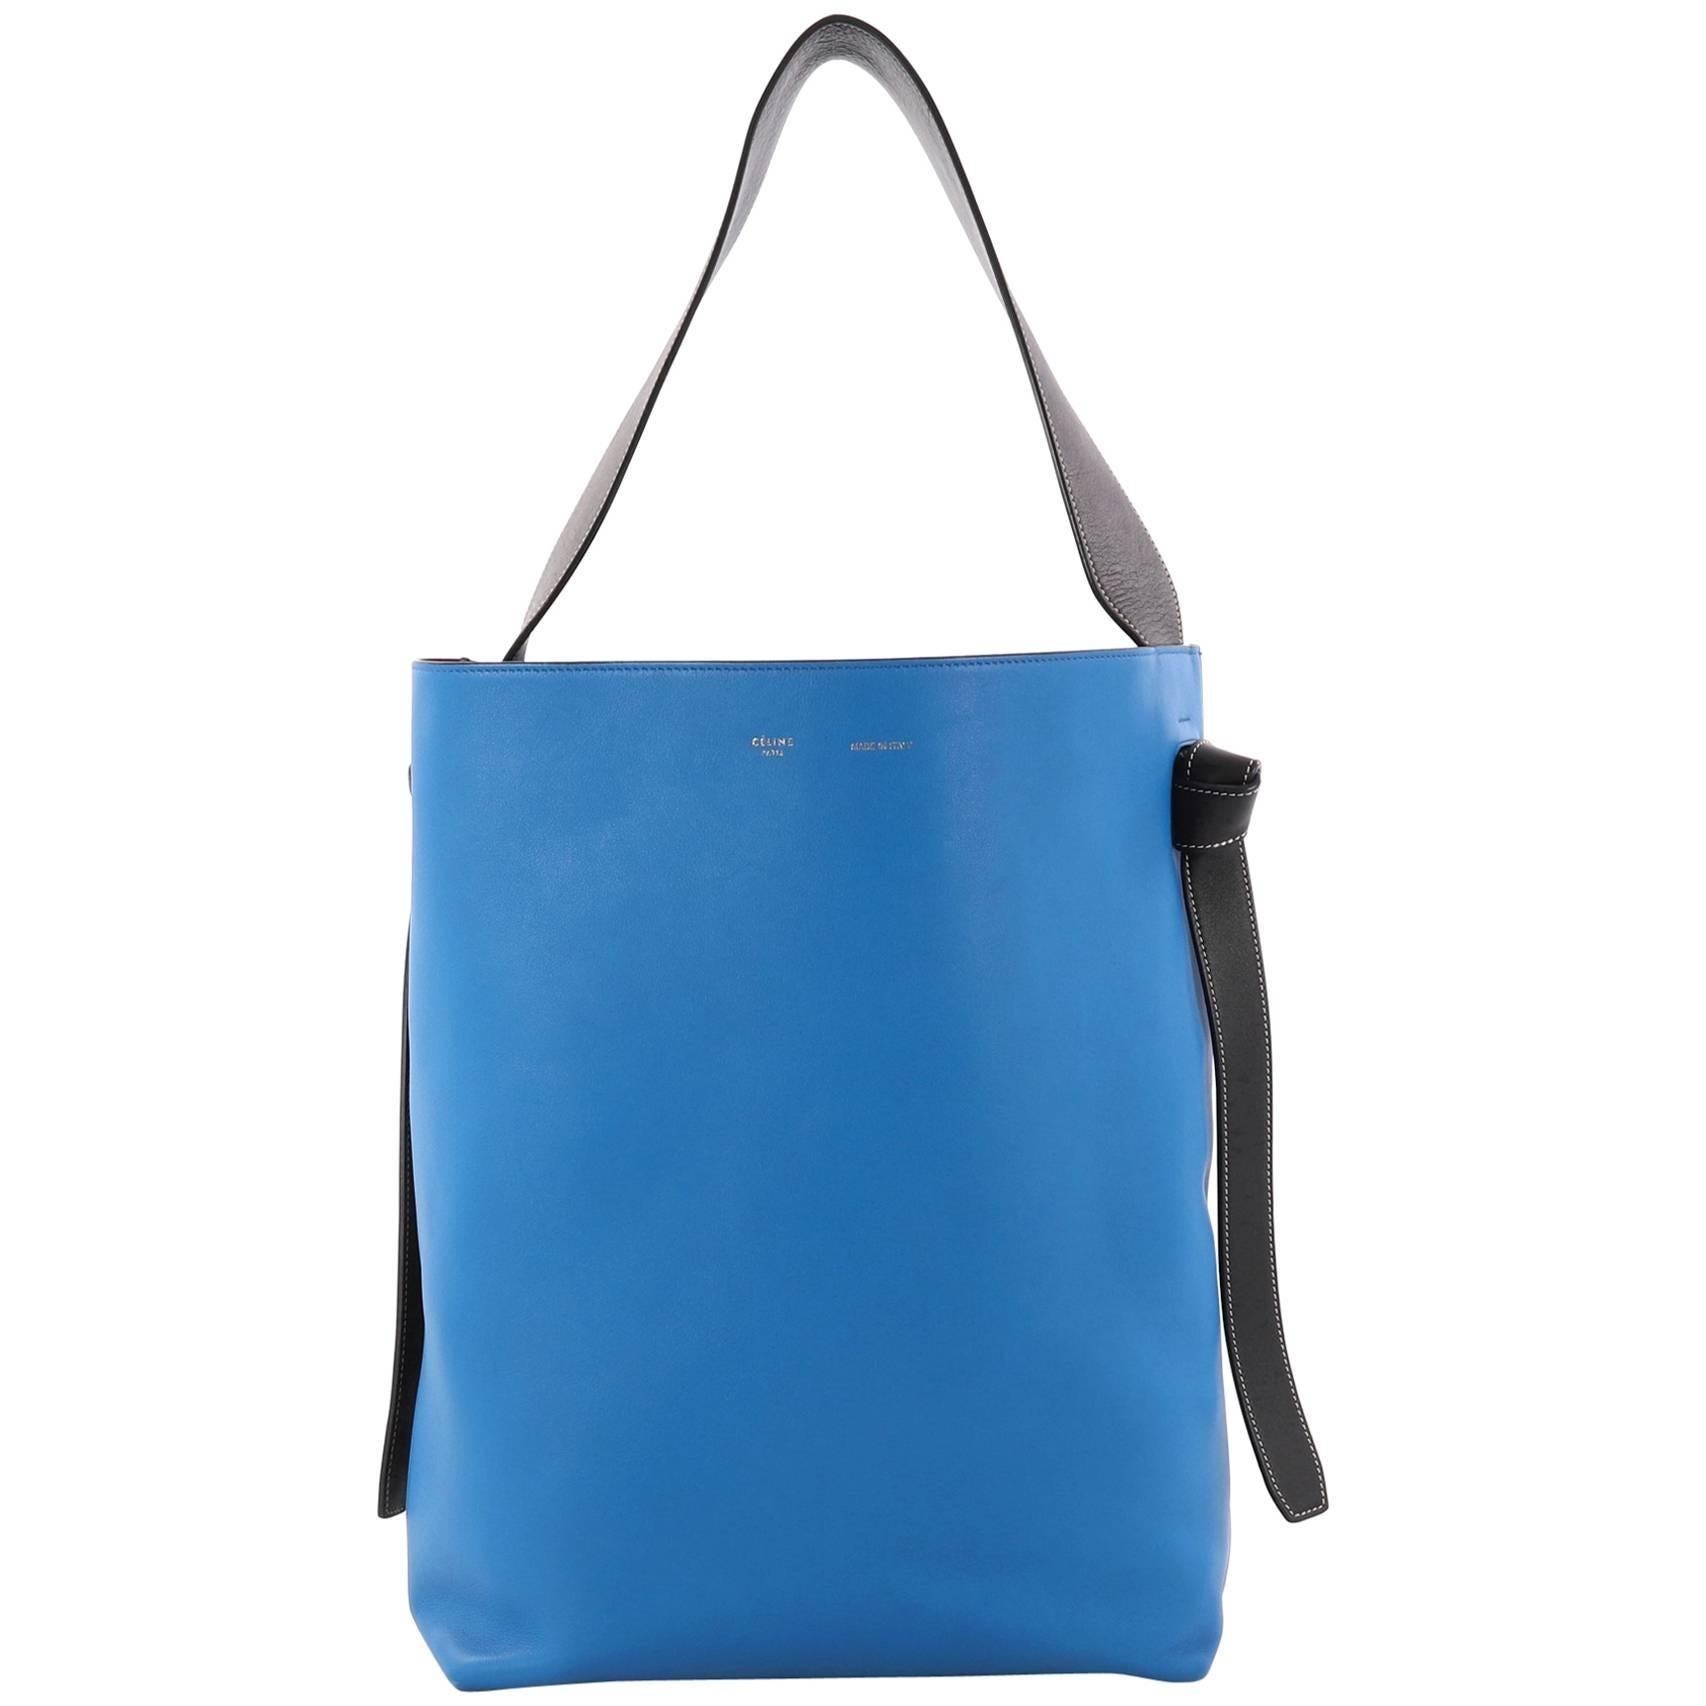 CELINE Small Twisted Cabas Green Blue Leather Large Tote Shoulder Bag Purse